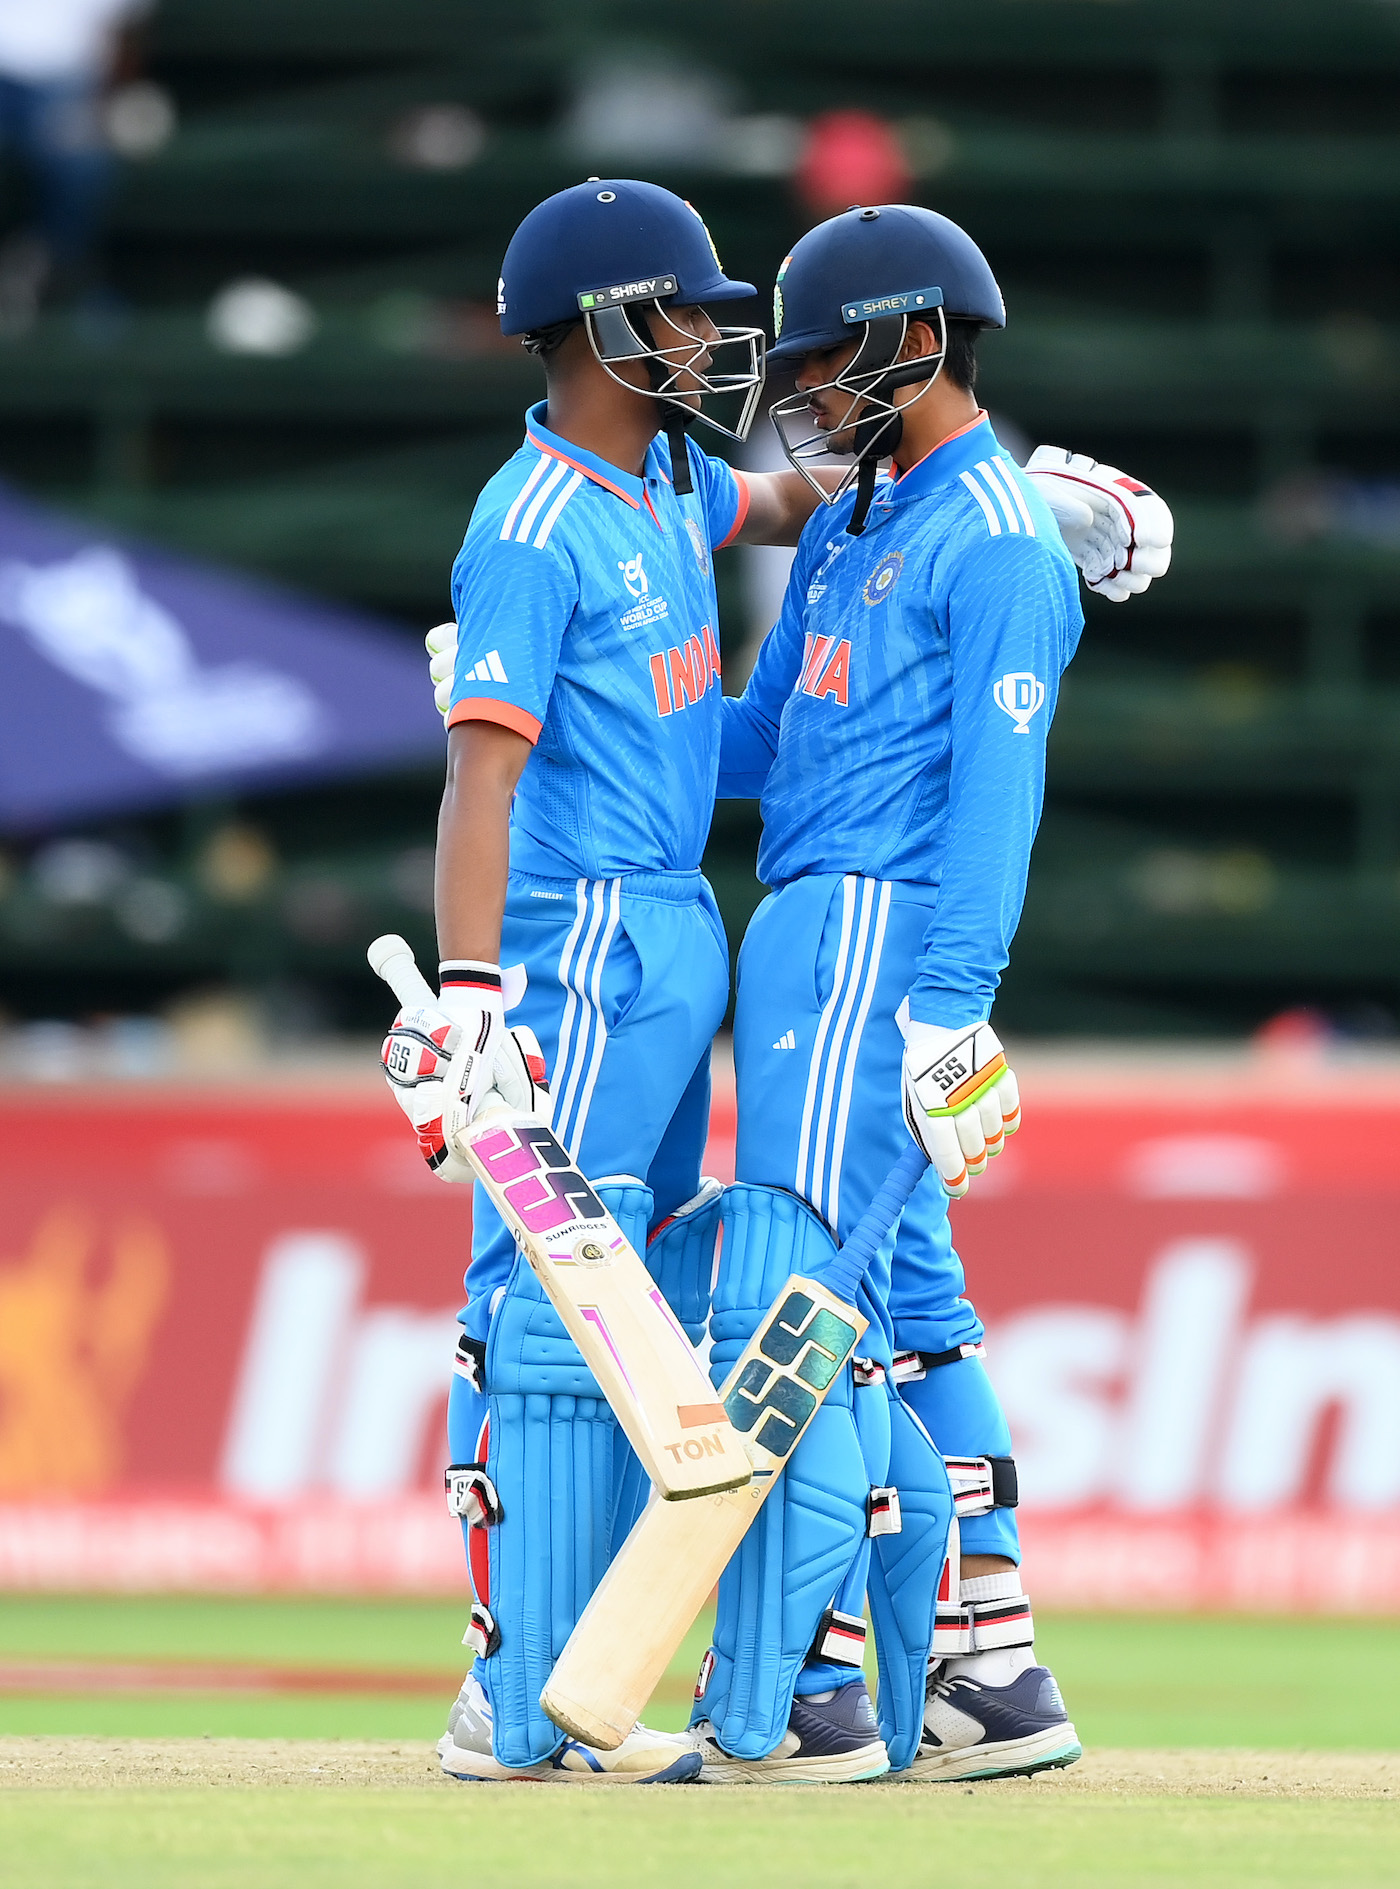 Saharan, Dhas lead India into ninth final with epic partnership